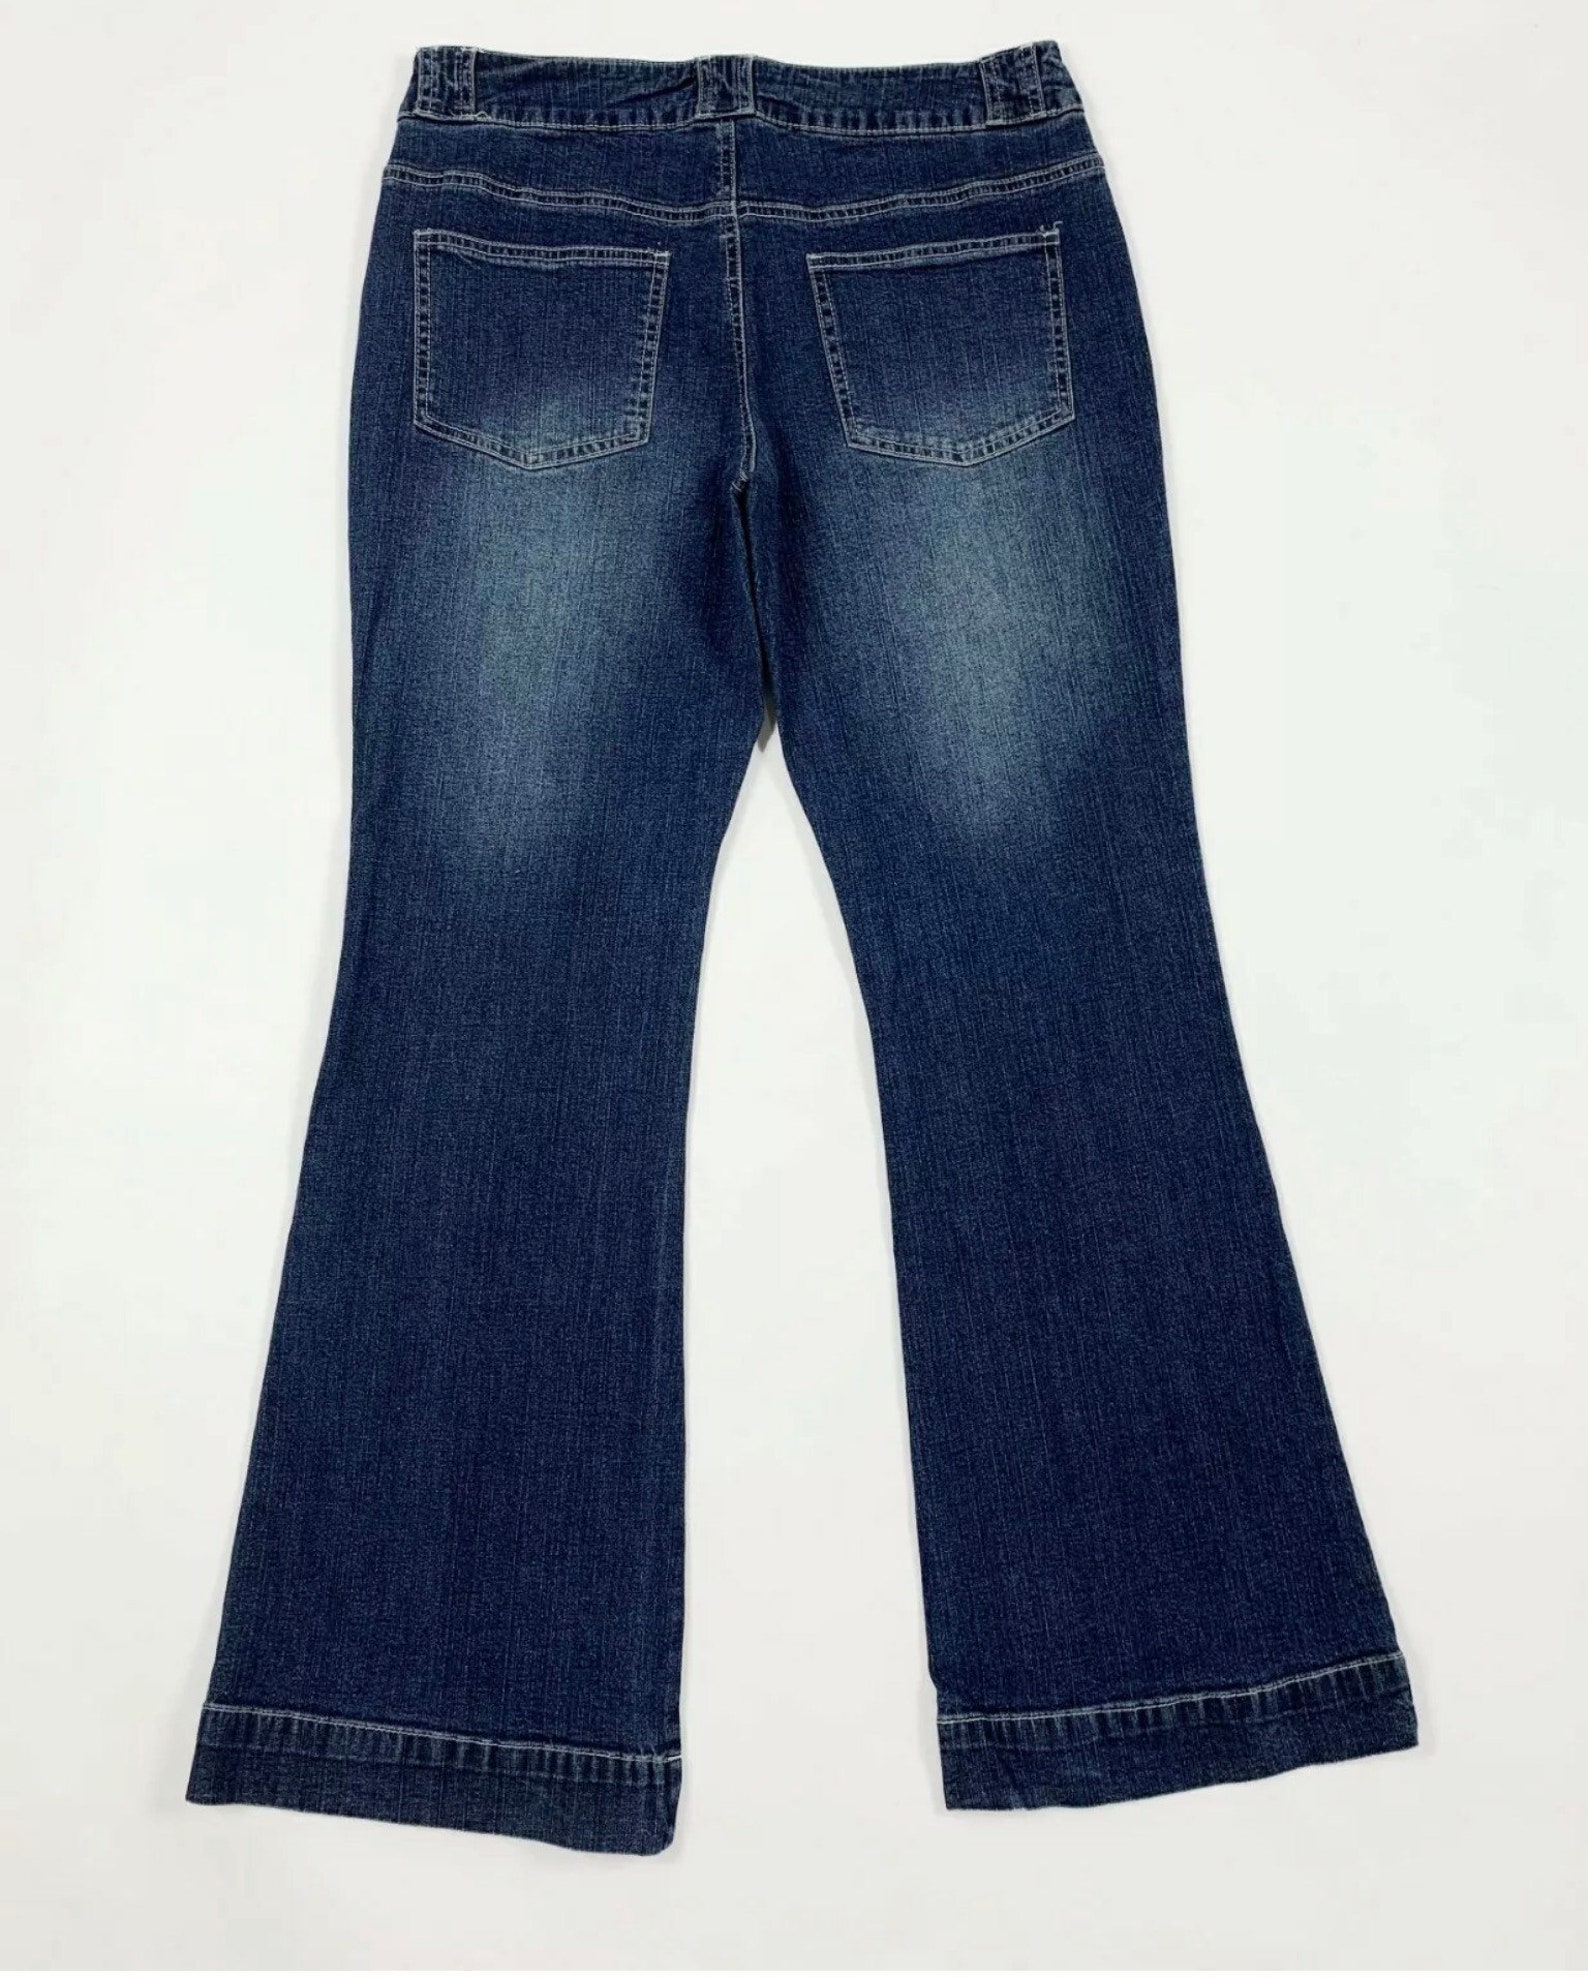 John Baner jeans donna usato a zampa W32 tg 46 bootcut flared | Etsy